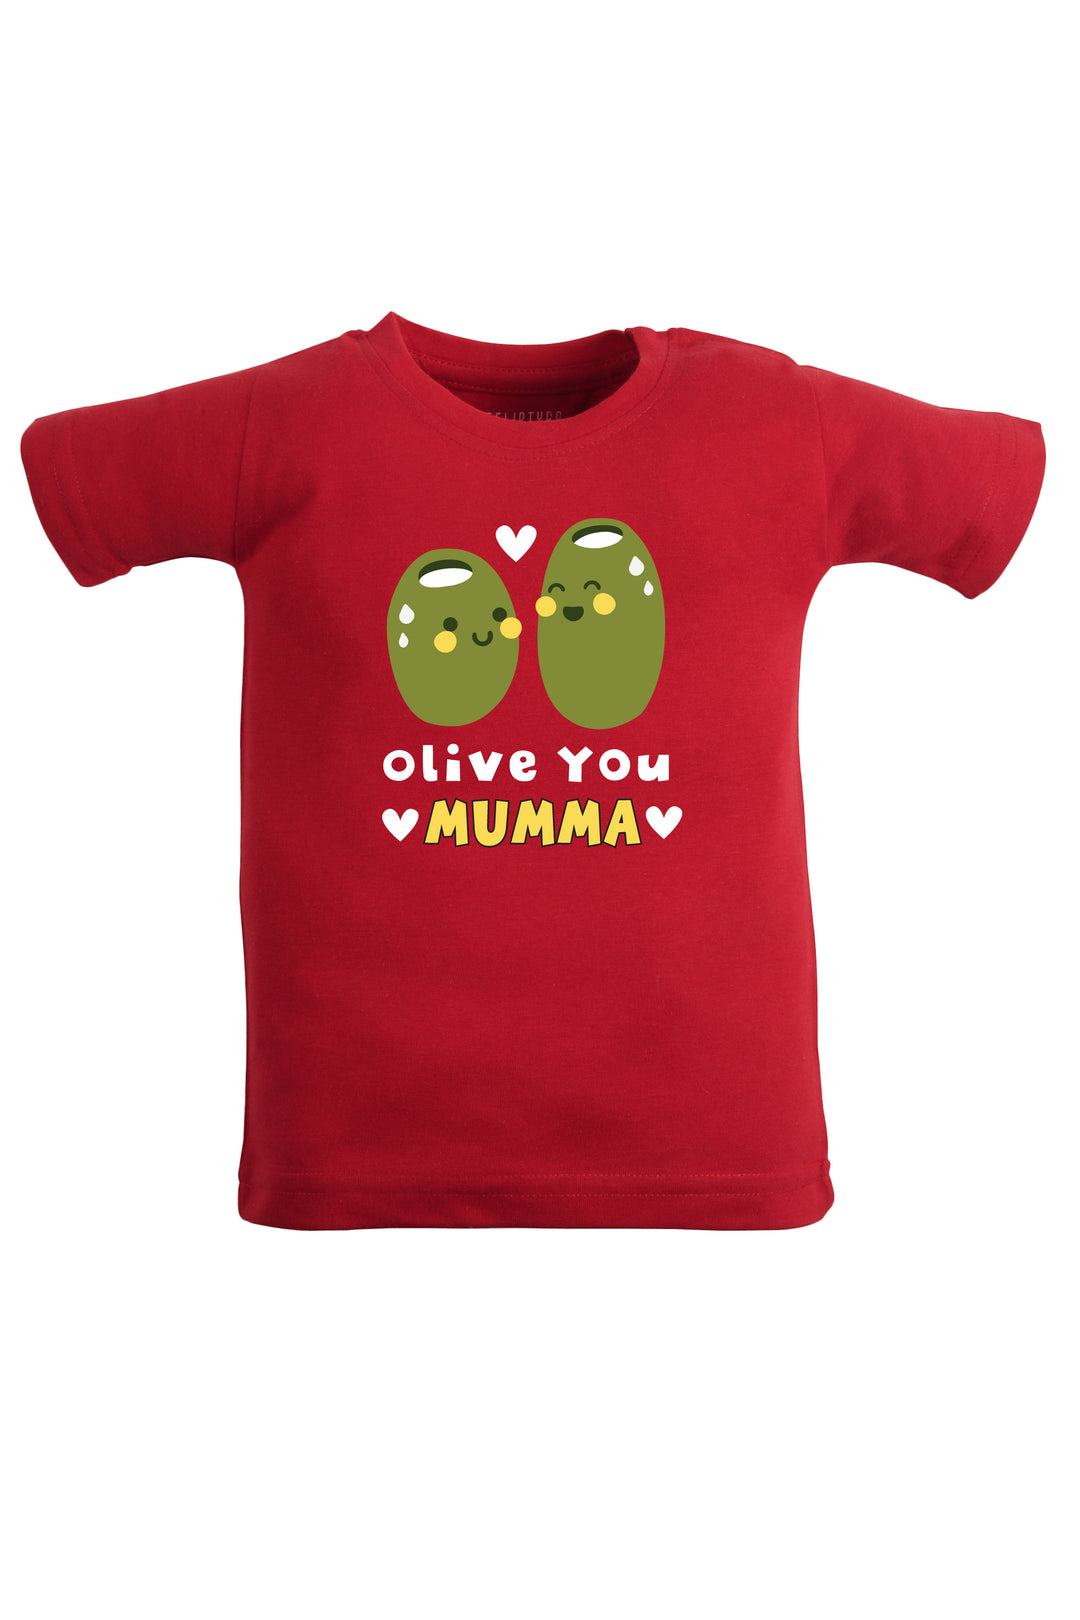 Olive You Kids T Shirt